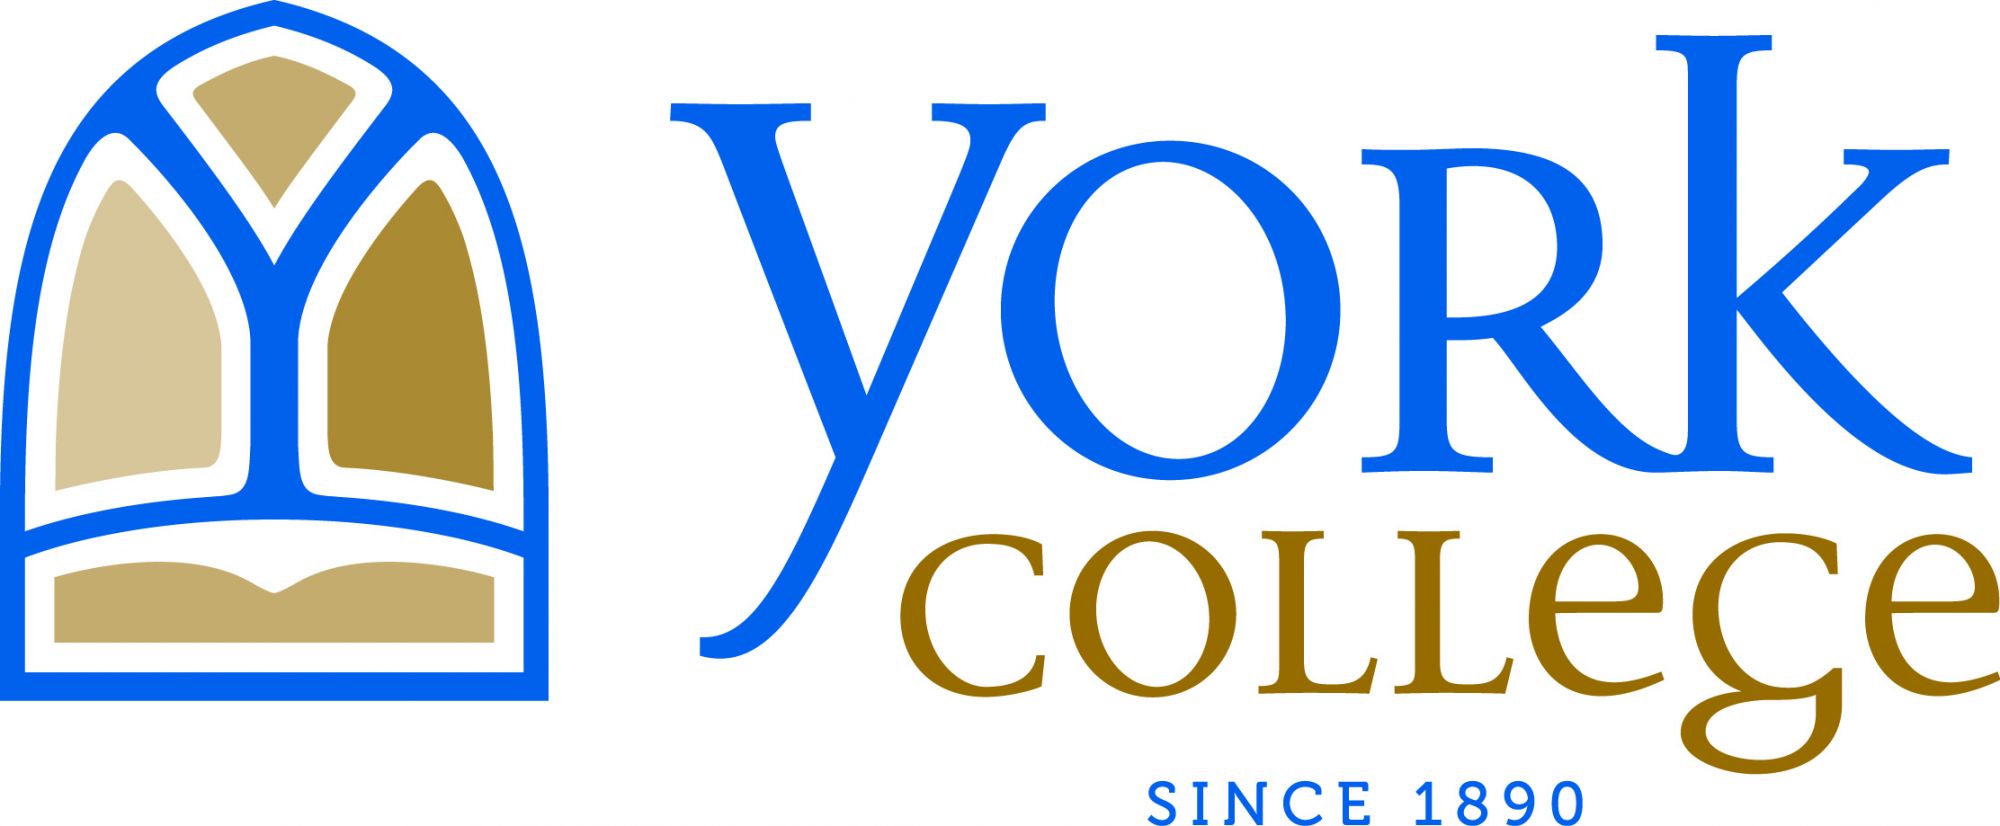 york college logo